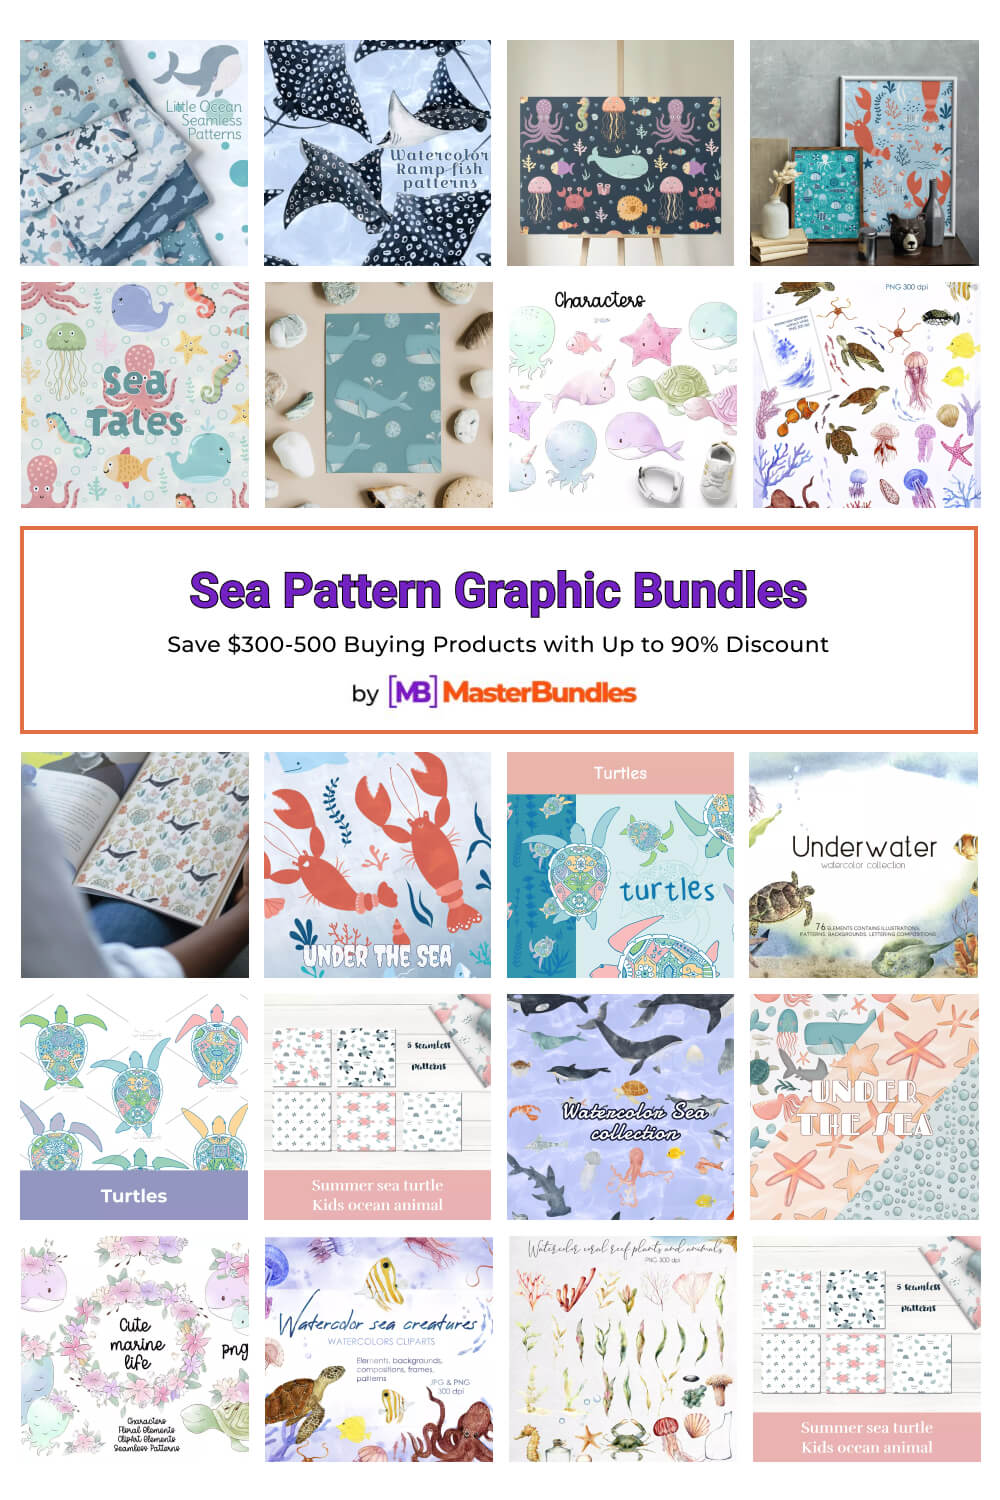 sea pattern graphic bundles pinterest image.